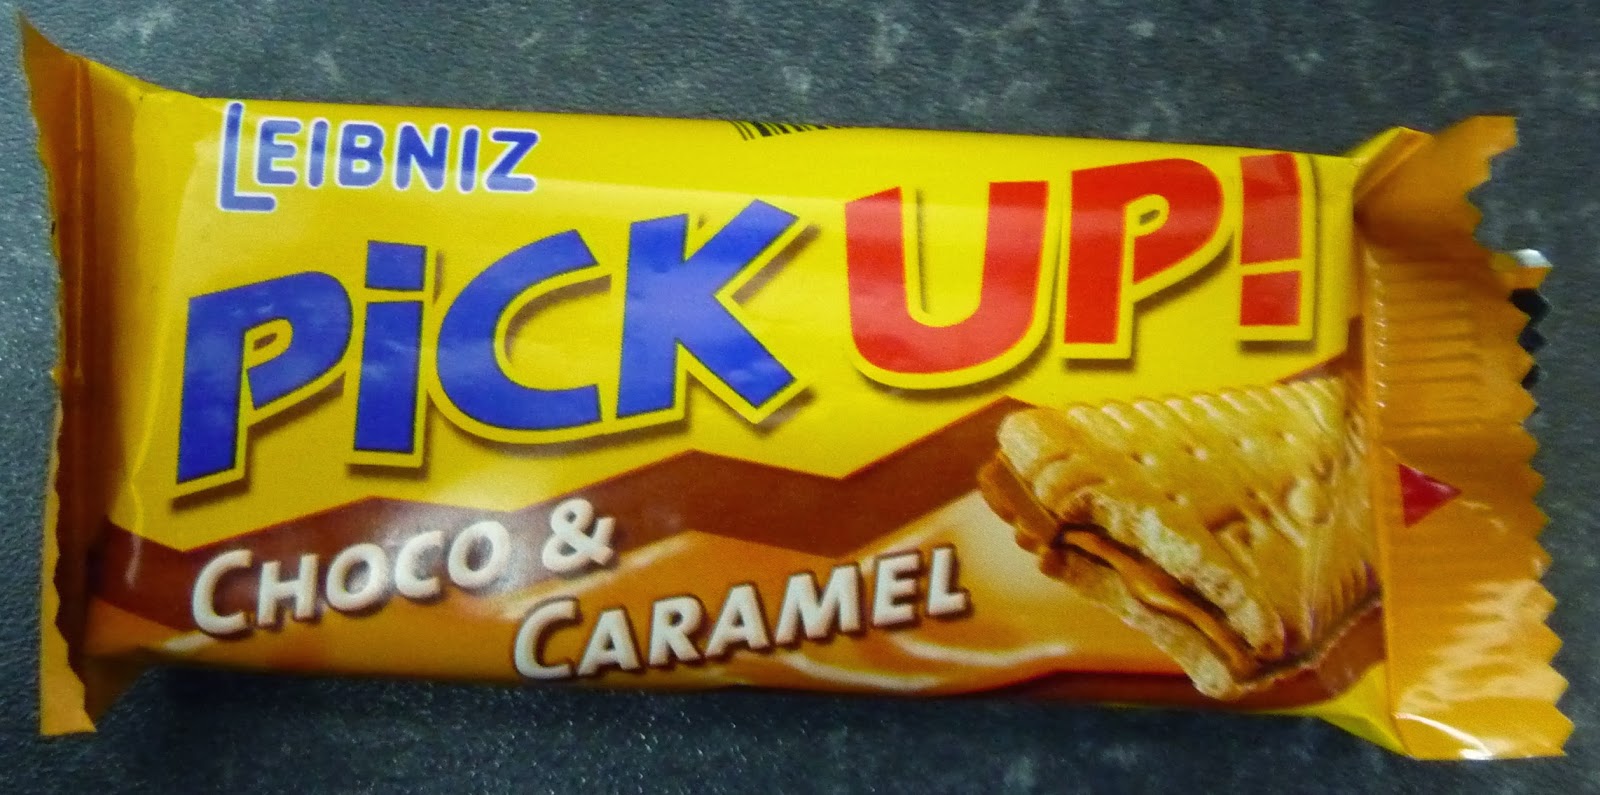 Something to look forward to: Leibniz Pick Up!: Choco & caramel